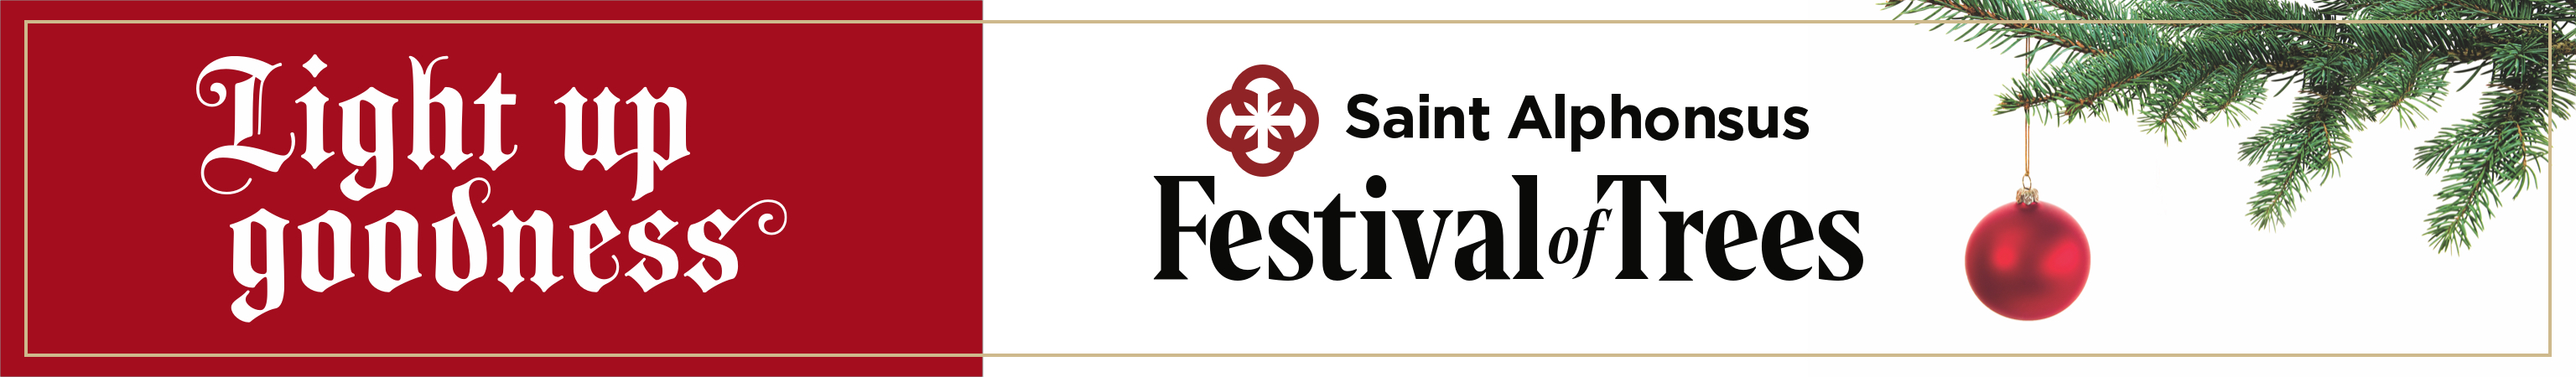 Saint Alphonsus Festival of Trees Virtual Visits from Santa